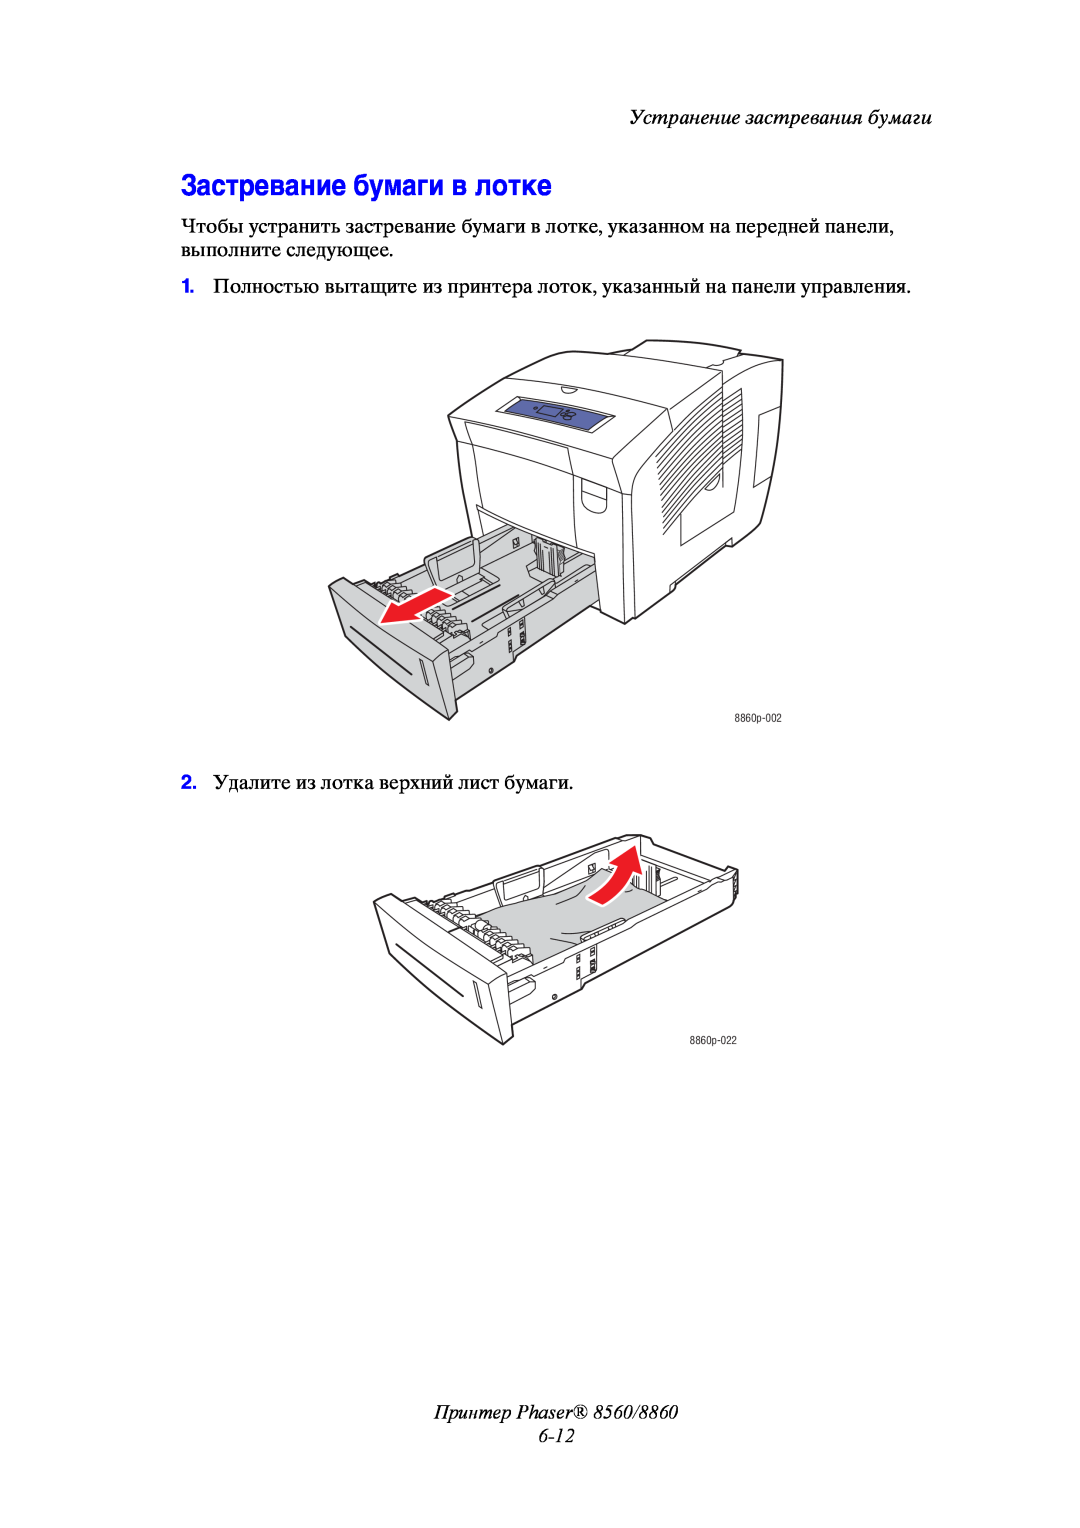 Xerox manual Застревание бумаги в лотке, Принтер Phaser 8560/8860 6-12, Устранение застревания бумаги 